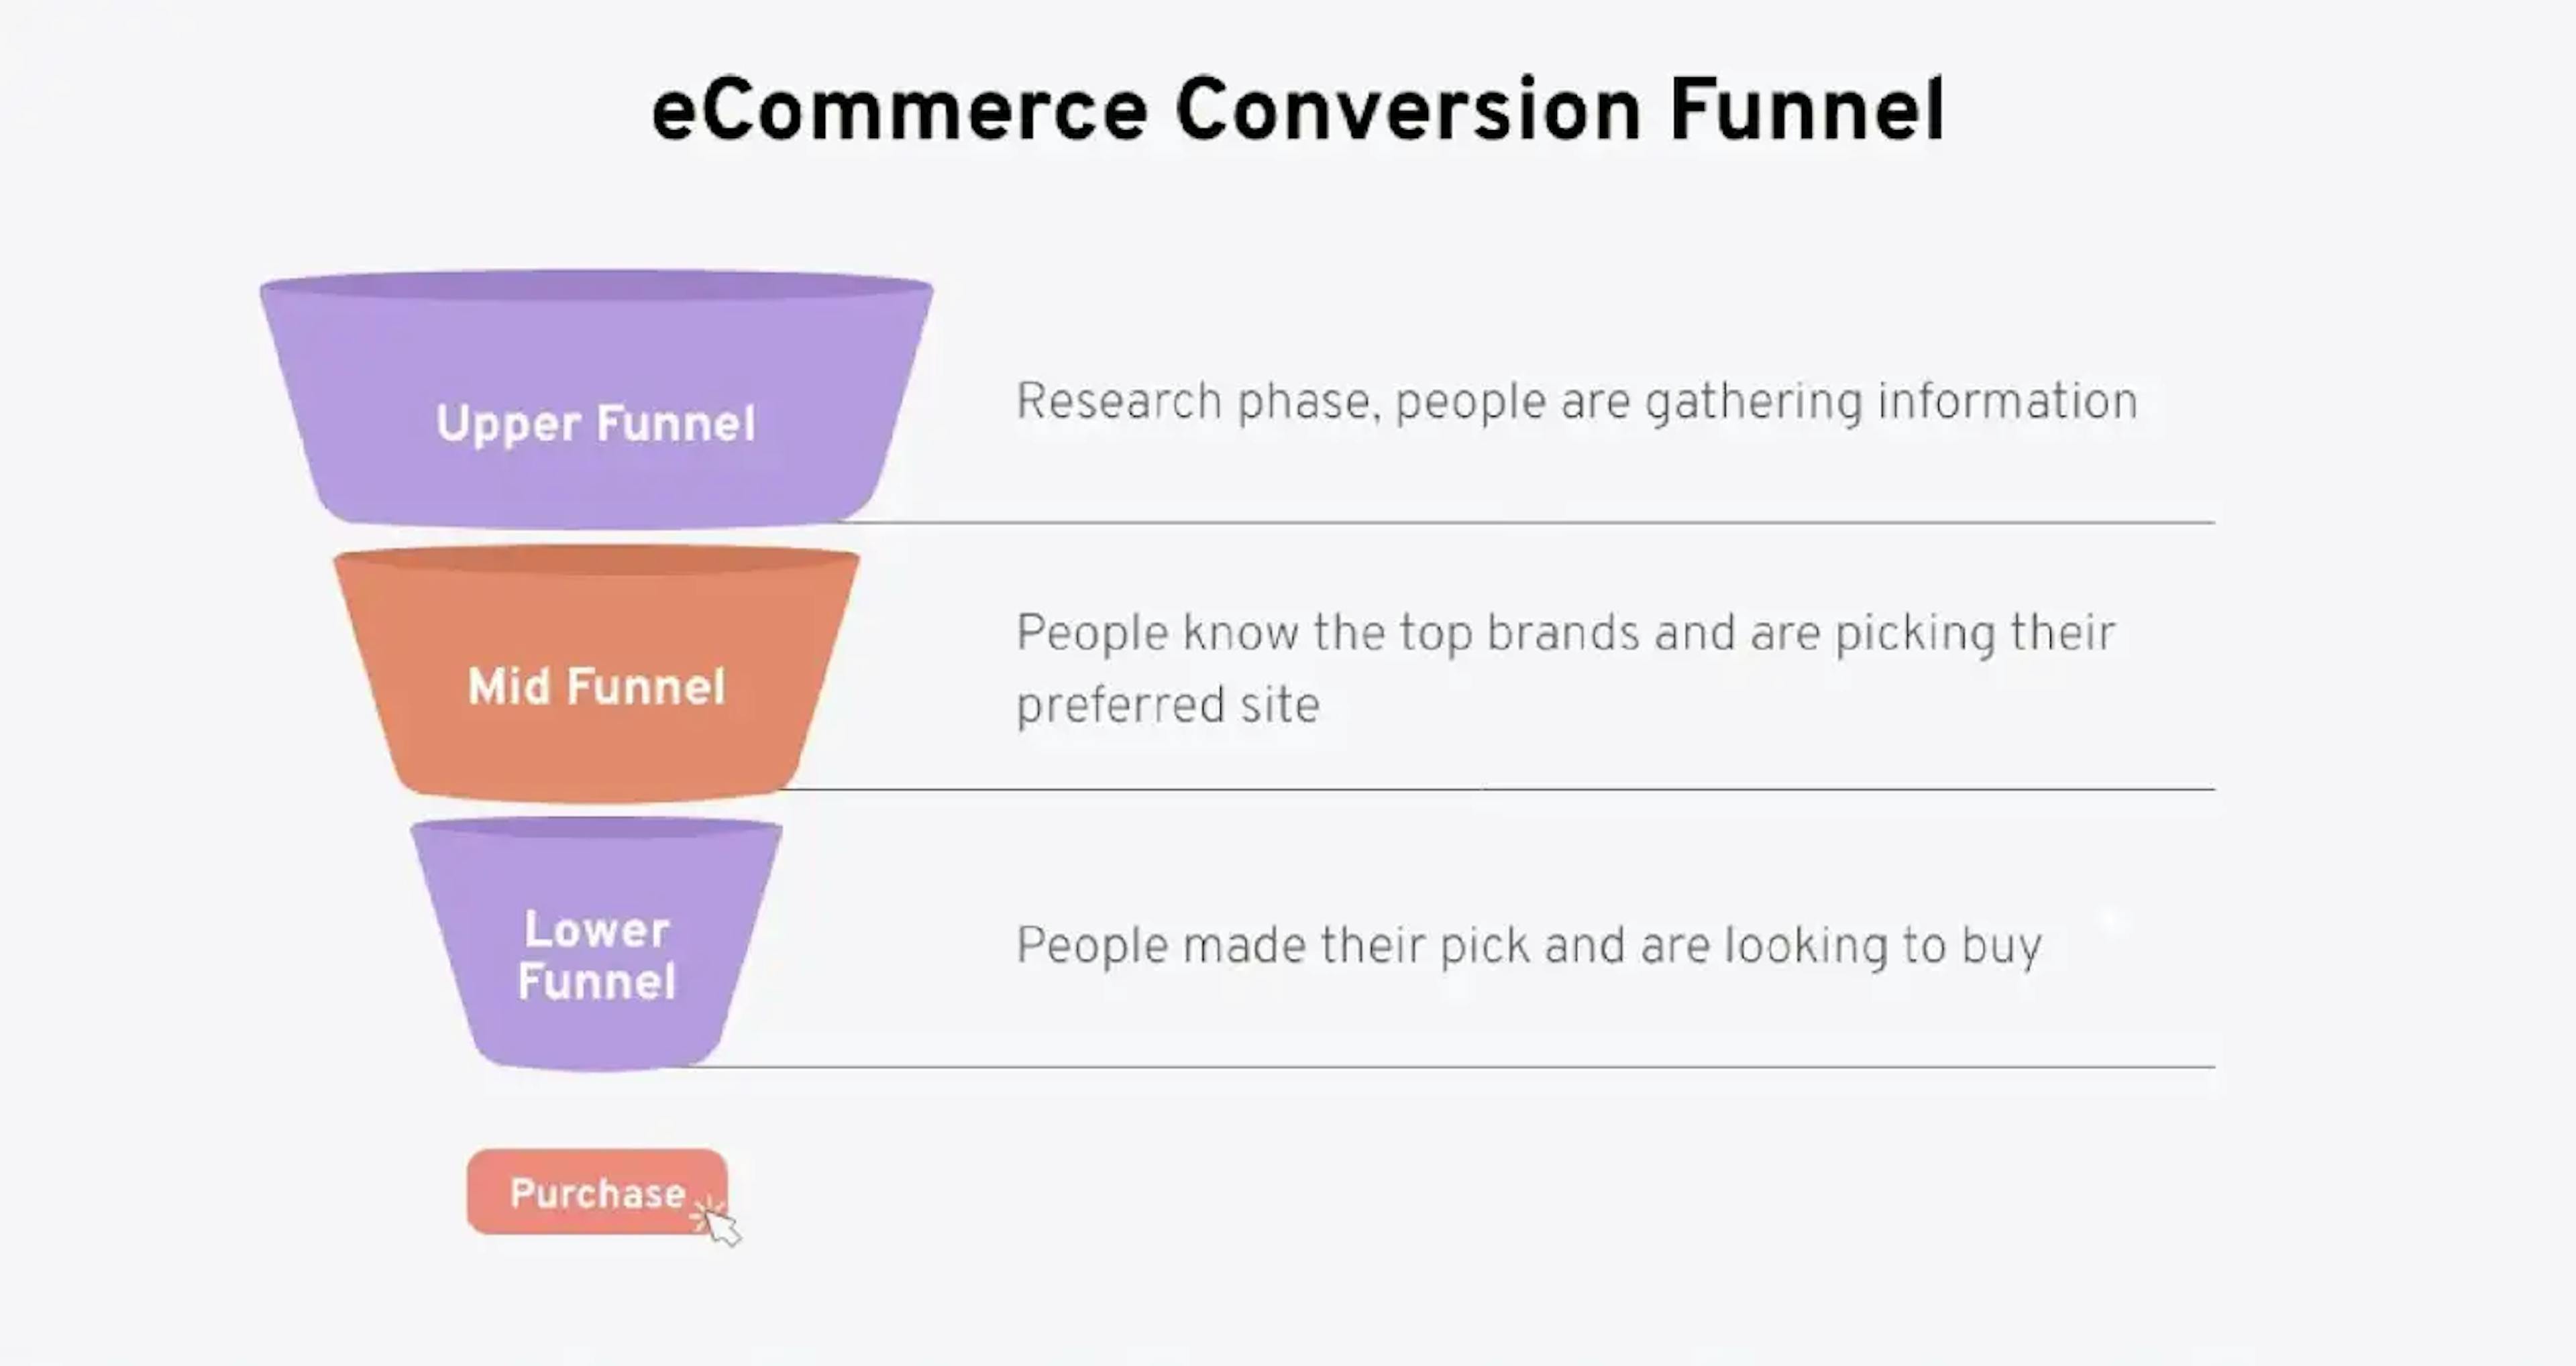 https://www.convertcart.com/blog/ecommerce-conversion-funnel